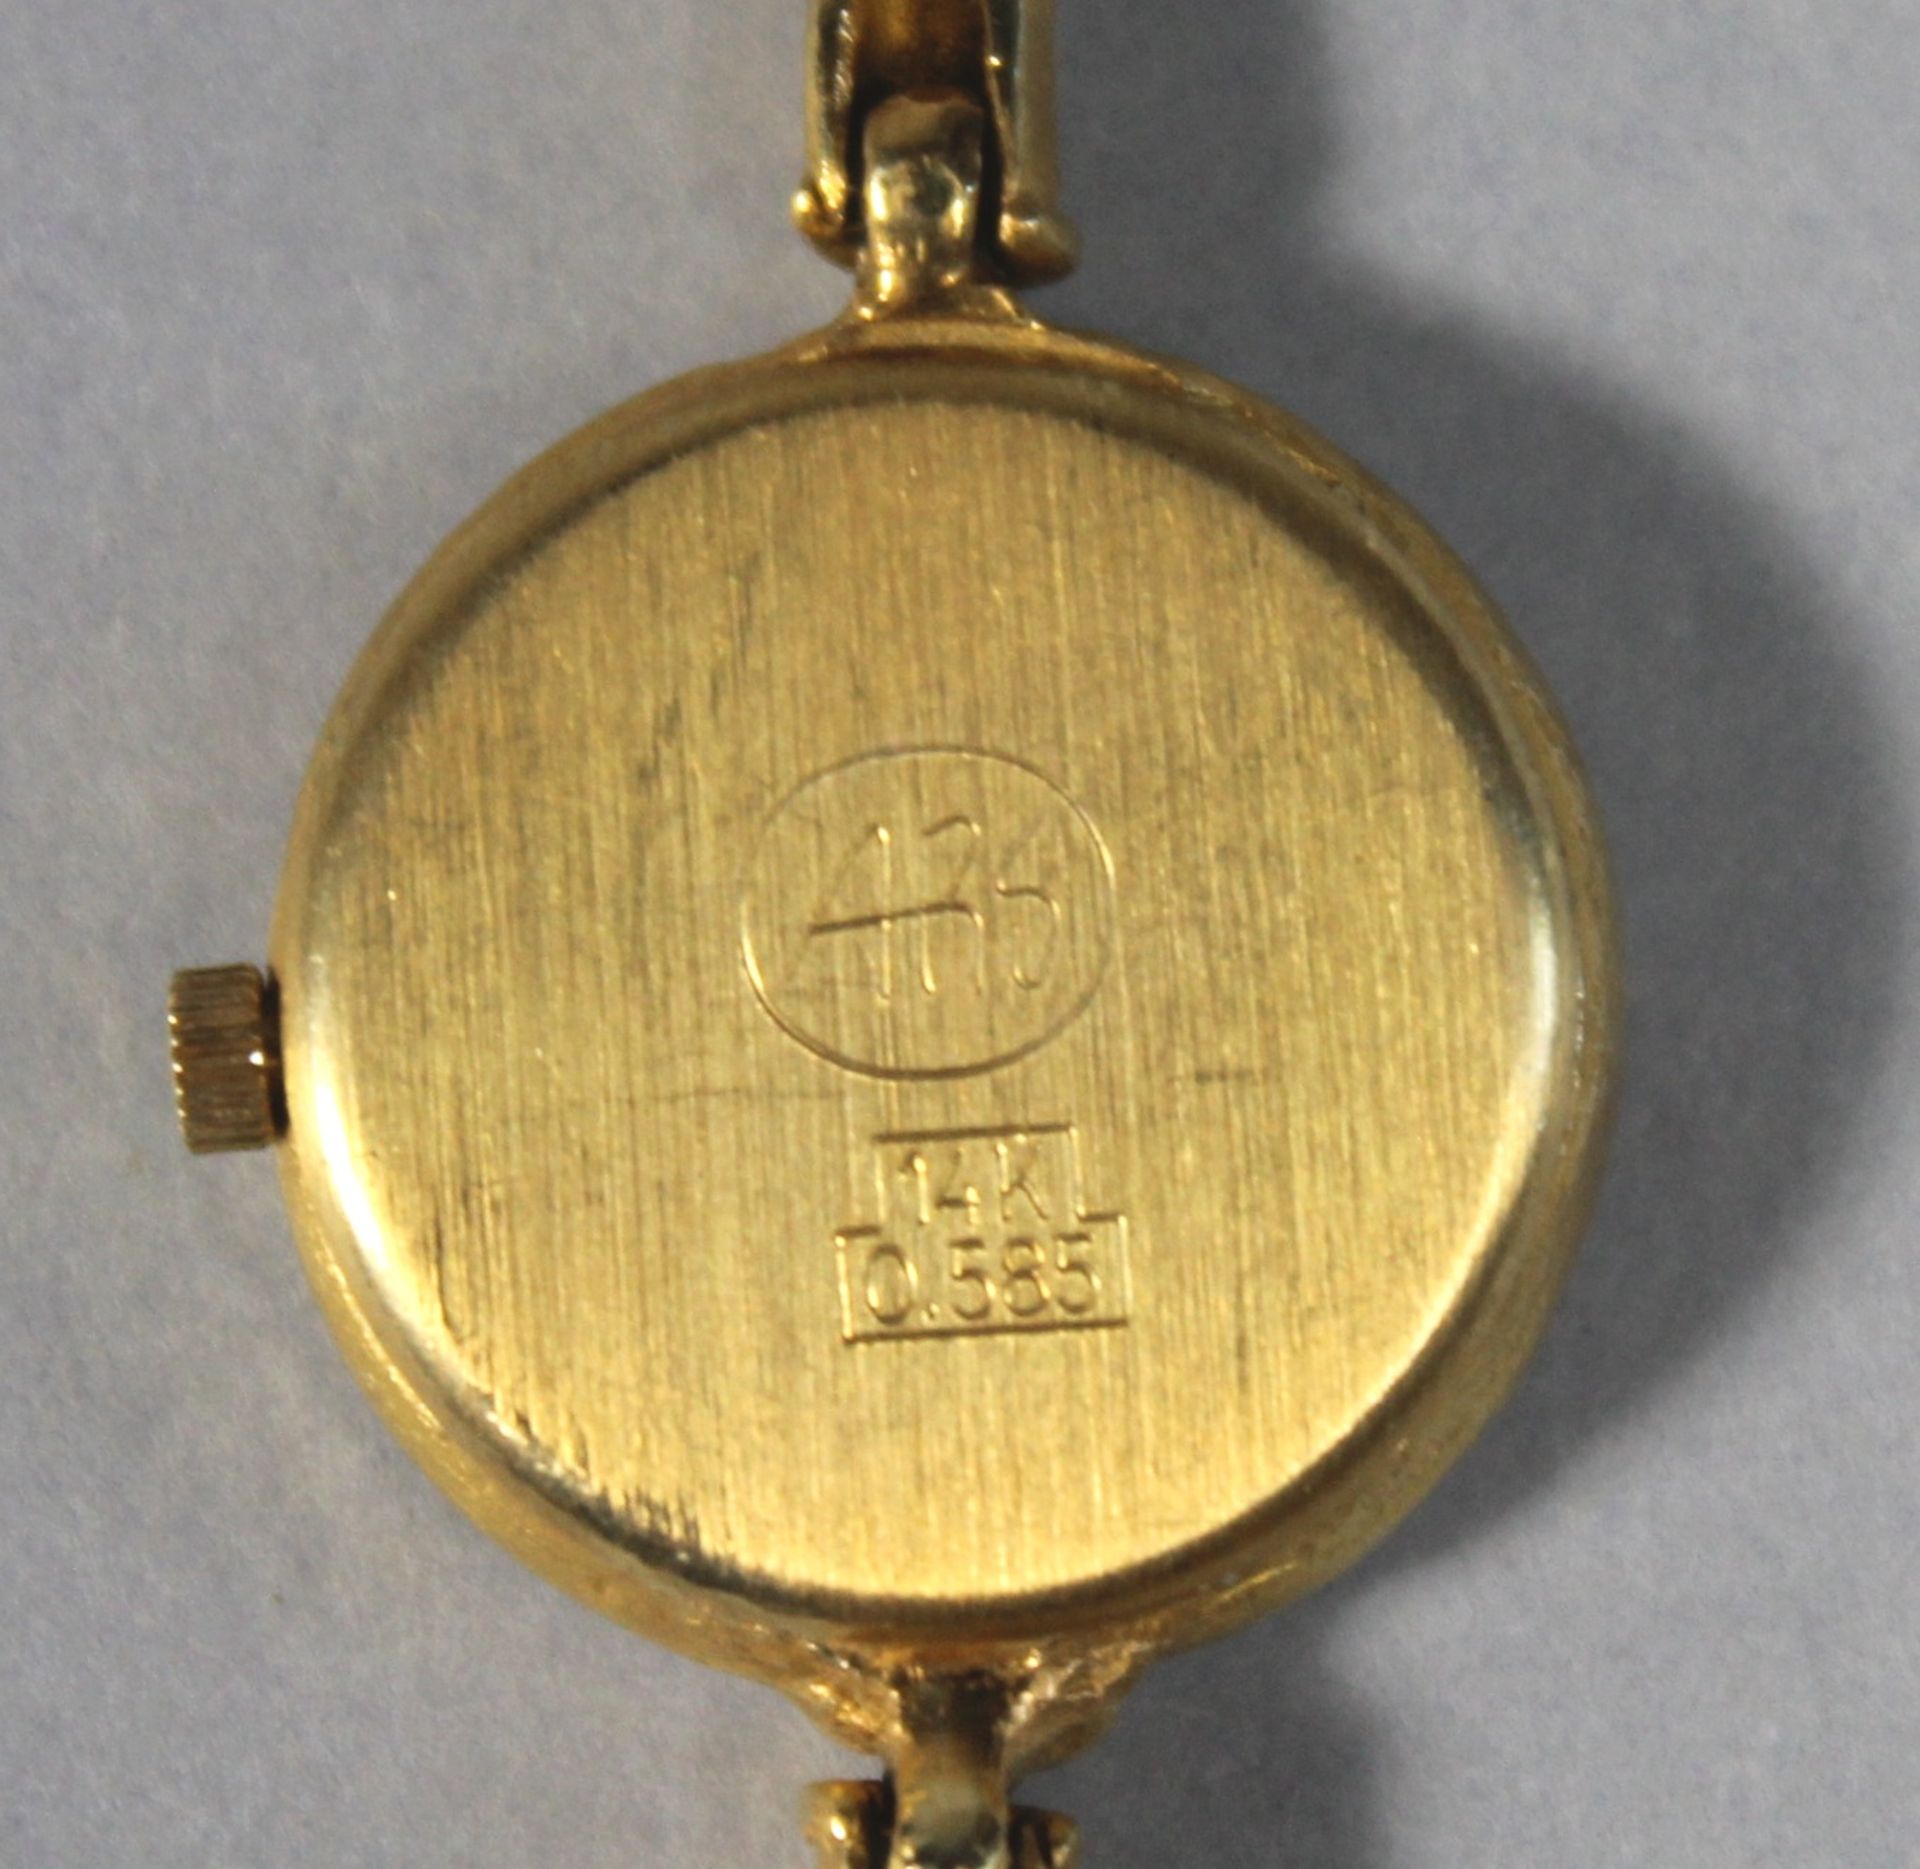 1 Damen-Armbanduhr 14kt.Gg (585/000) "ARS, Atelier Reister", L ca. 18cm, (ca. 22,31g Gesamtgewicht), - Image 2 of 3